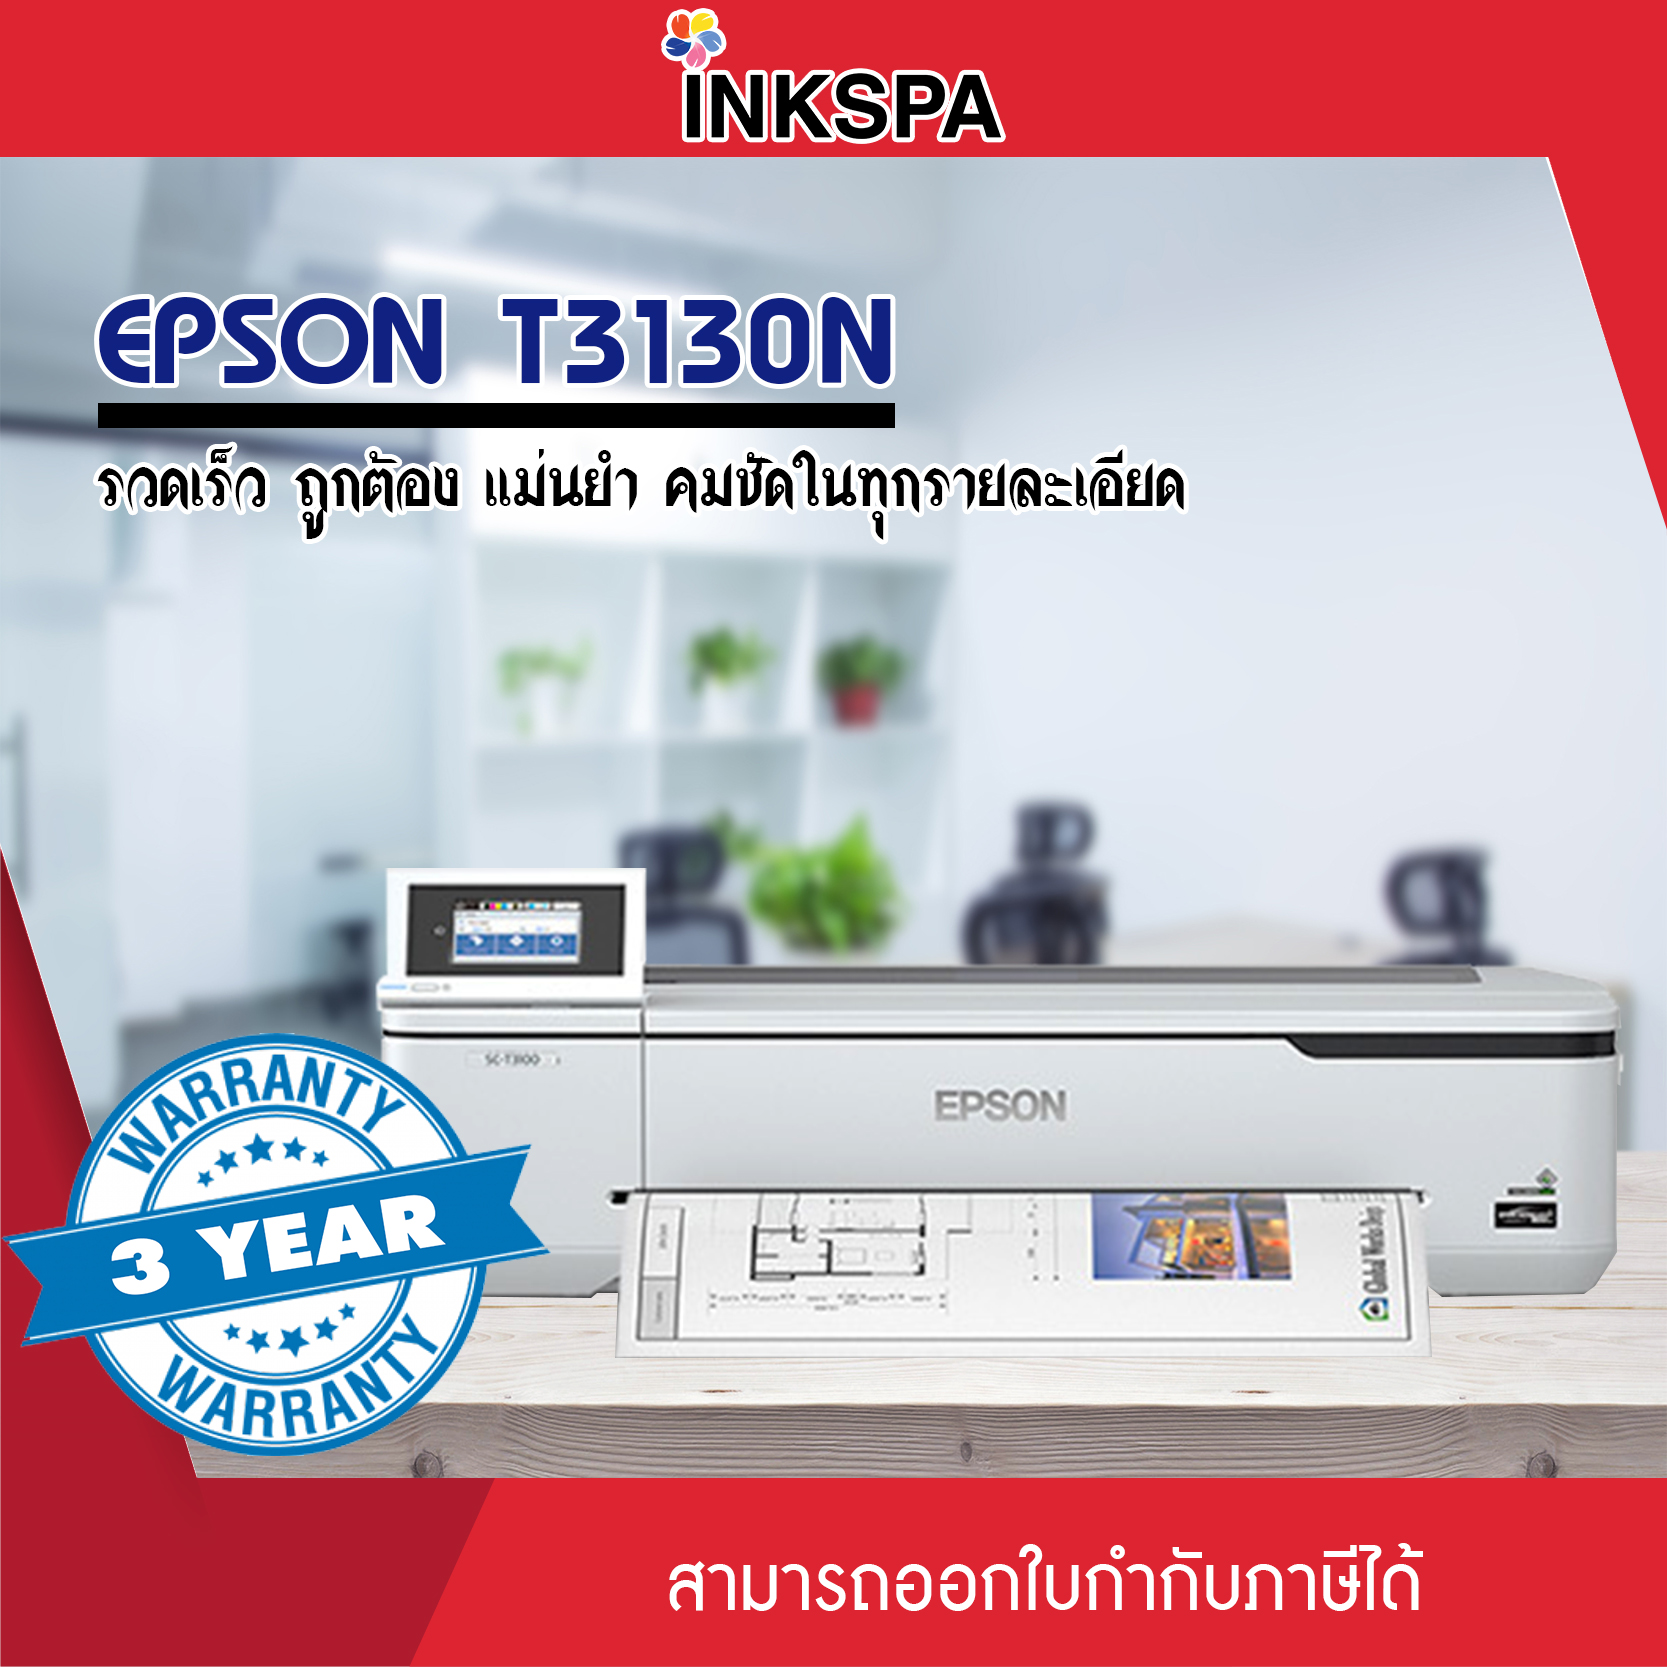 Epson T3130N Printer เครื่องพิมพ์ขนาด A1 หน้ากว้าง24 นิ้ว รวดเร็ว ถูกต้อง แม่นยำ คมชัดในทุกรายละเอียด